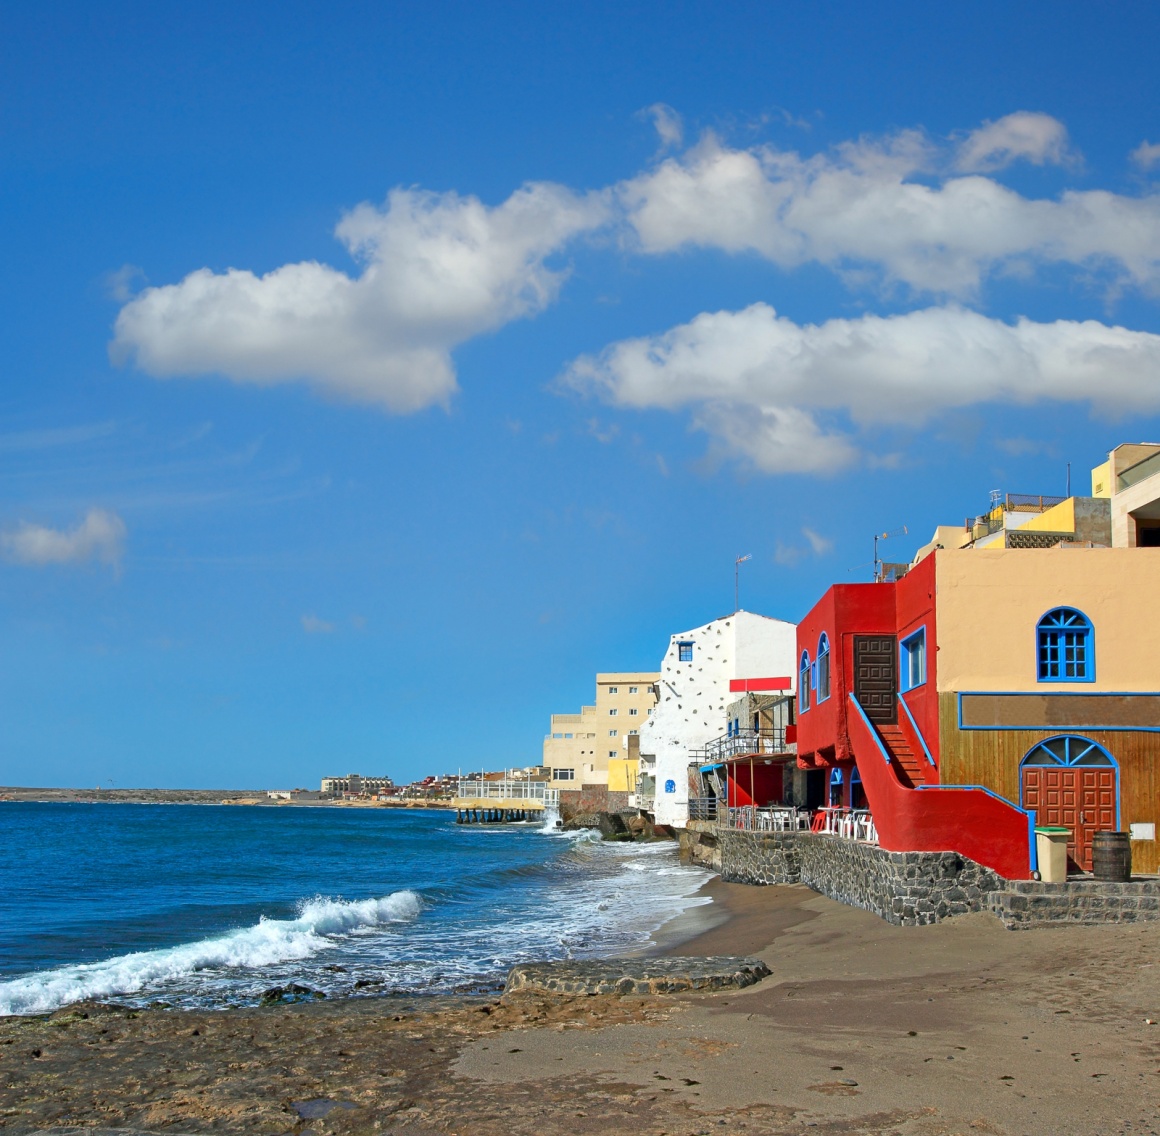 'Coast in the tourist resort Medano, Tenerife, Canary Islands, Spain' - Tenerife